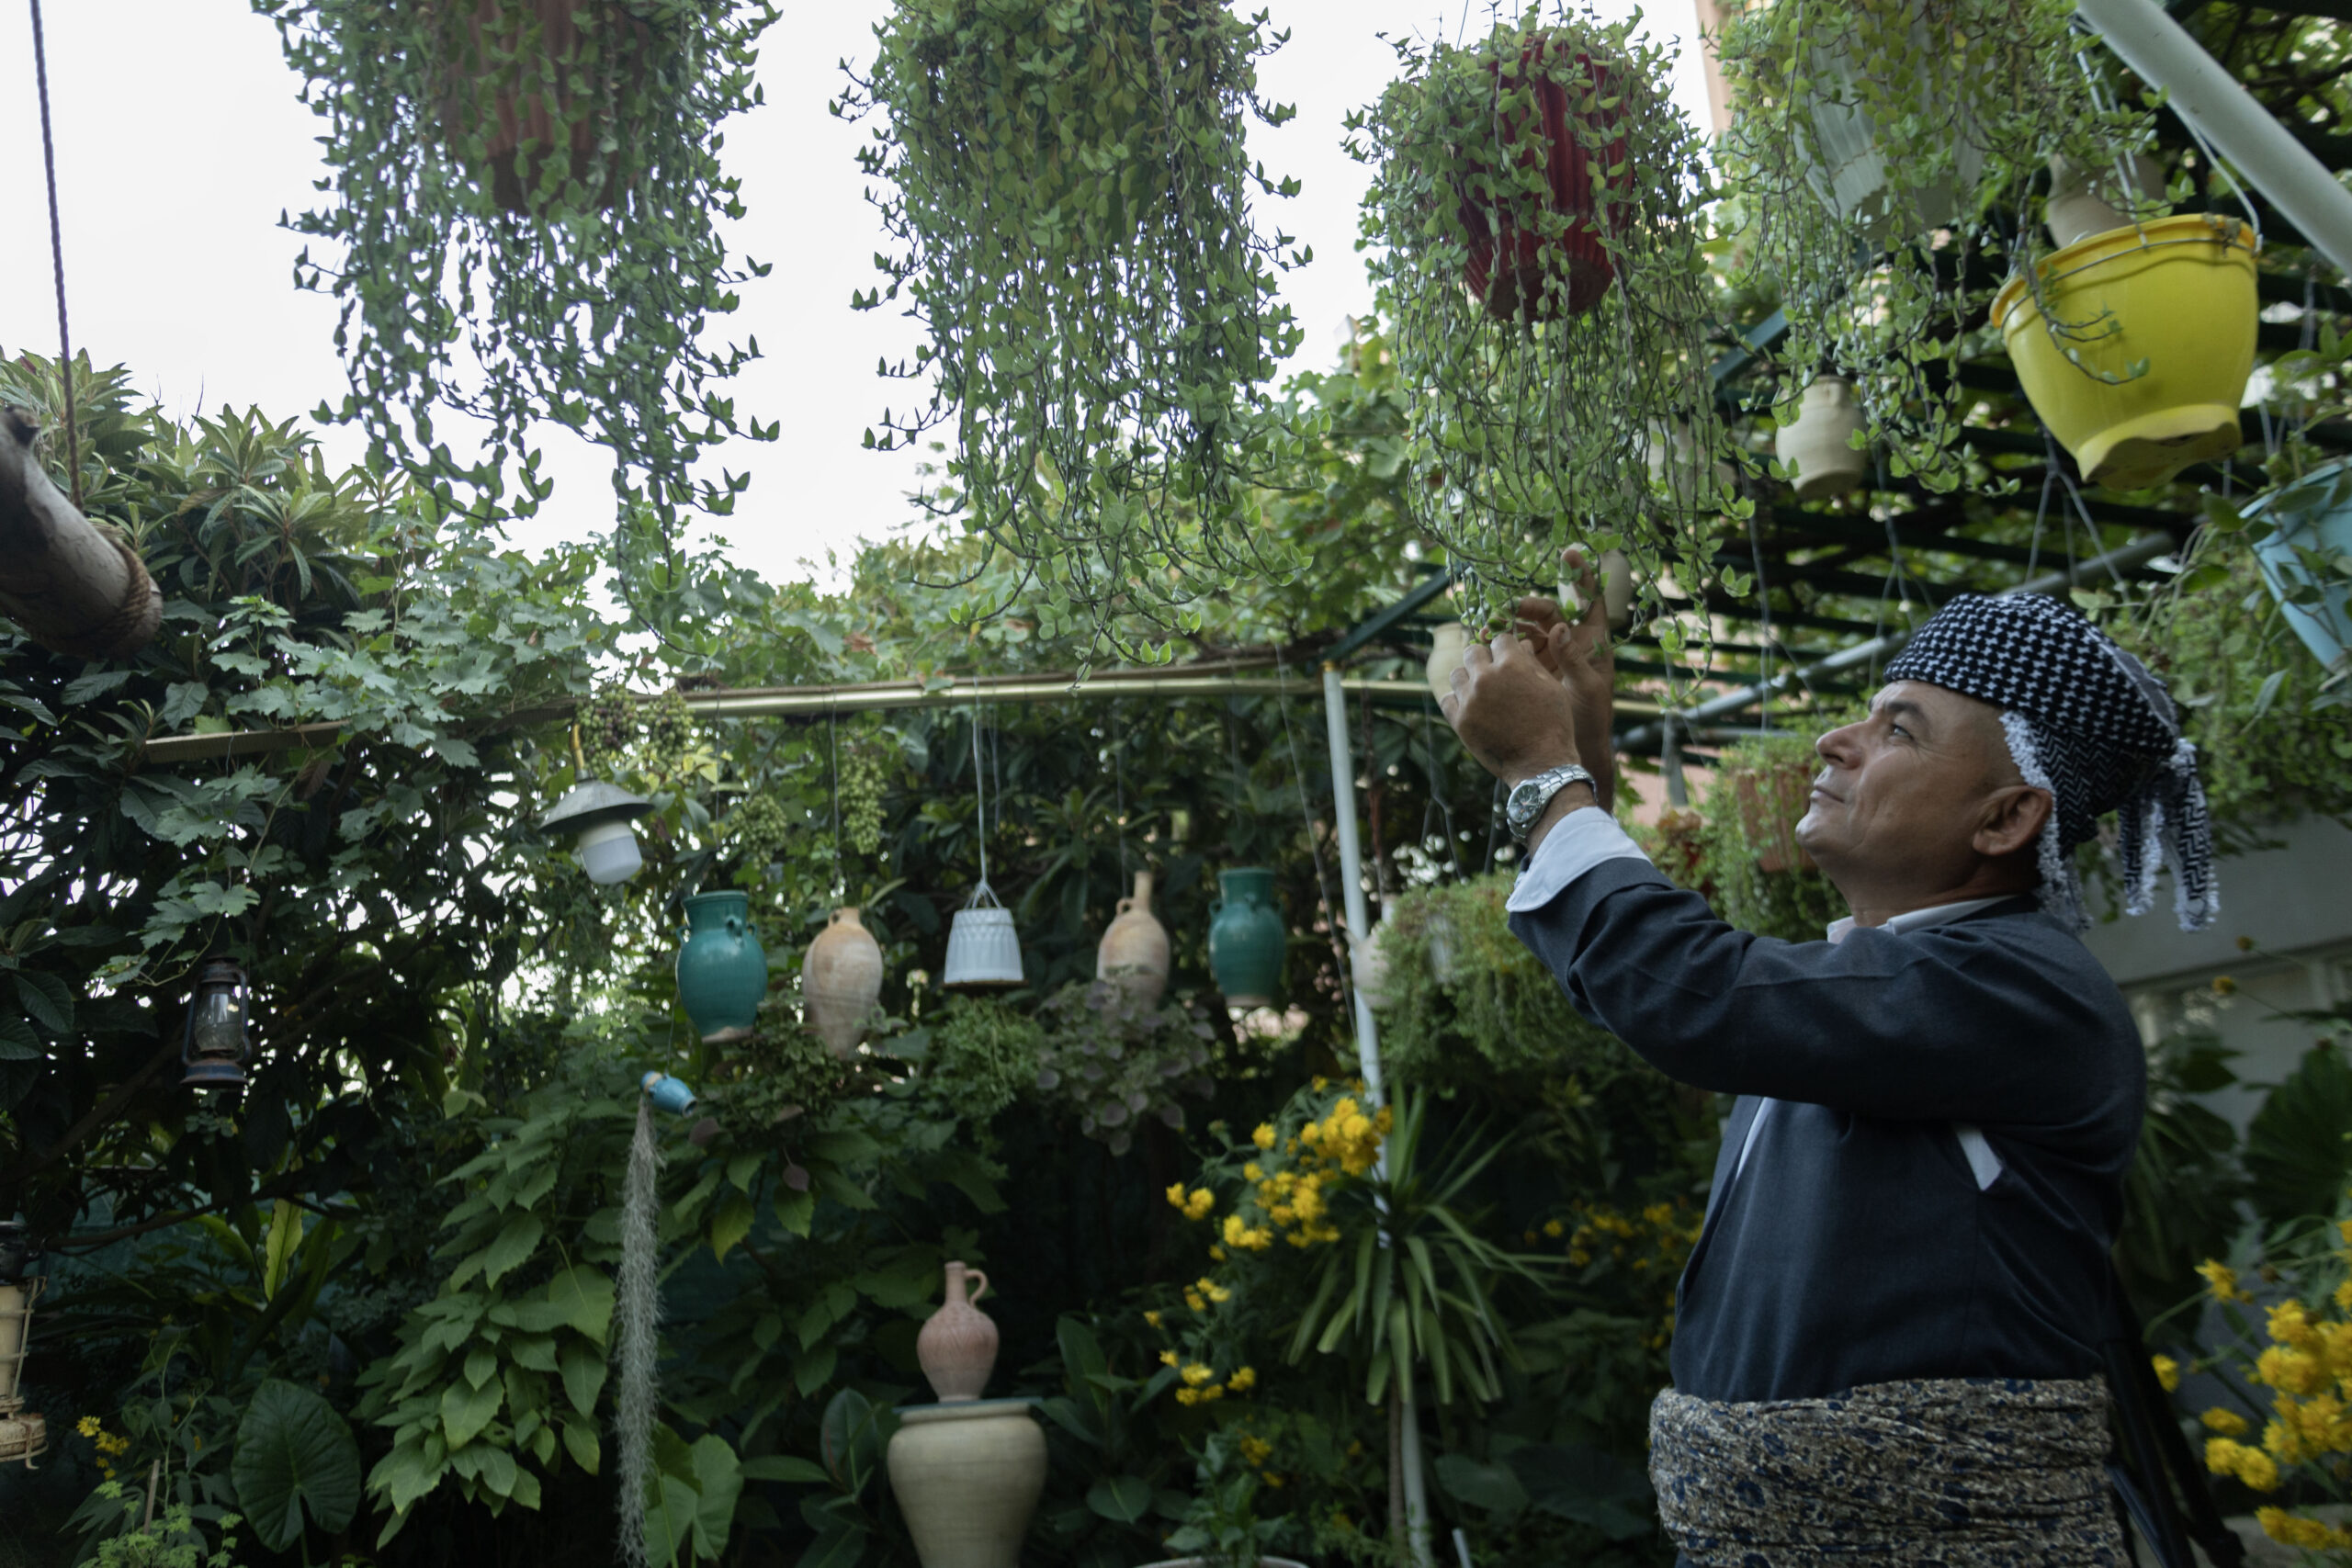 An Iraqi citizen challenges climate change through his garden